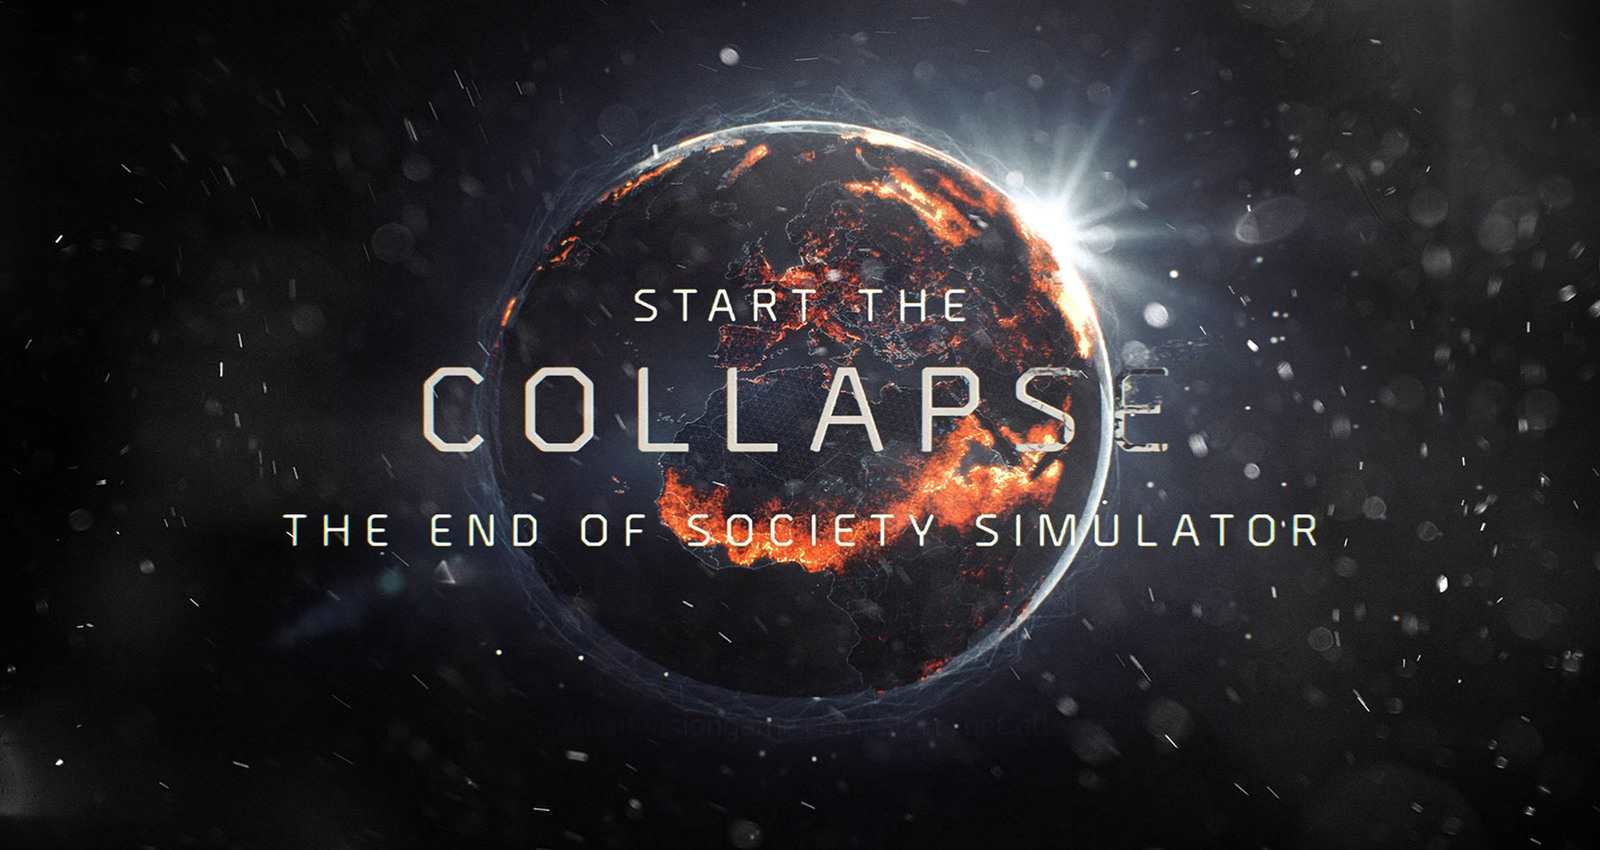 End of society simulator